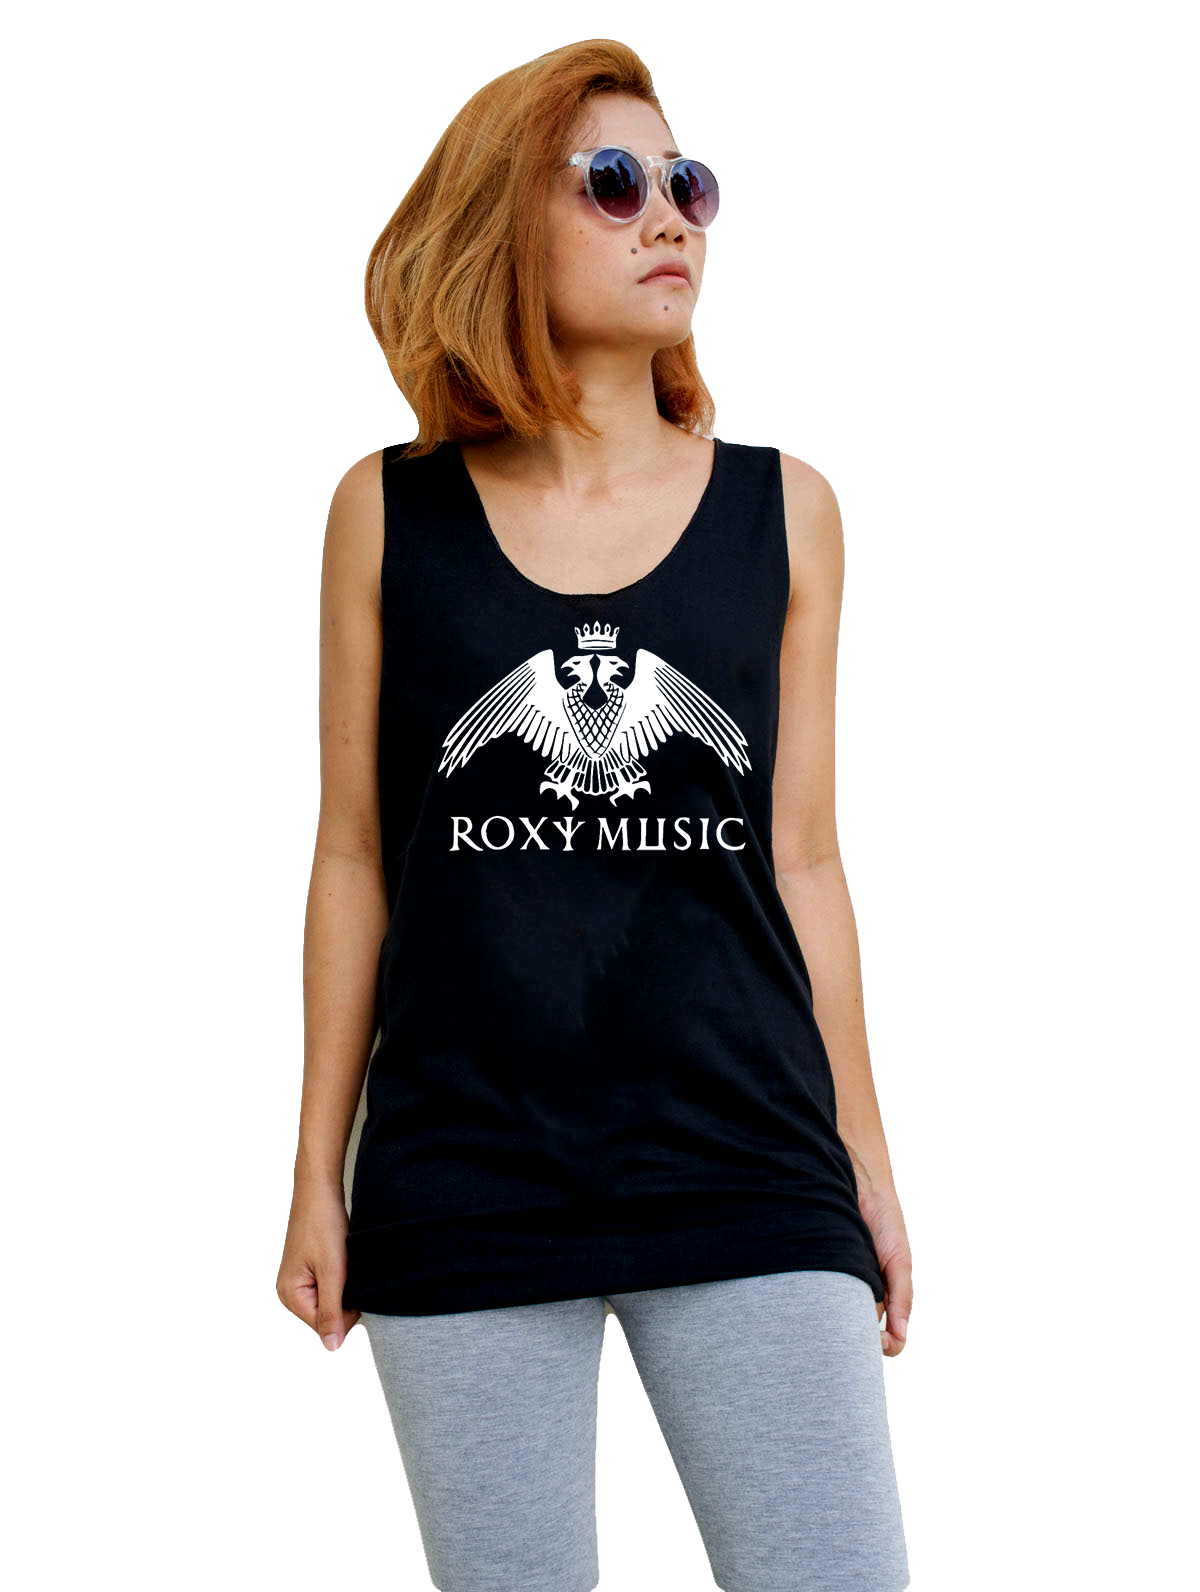 Unisex Roxy Music Tank-Top Singlet vest Sleeveless T-shirt